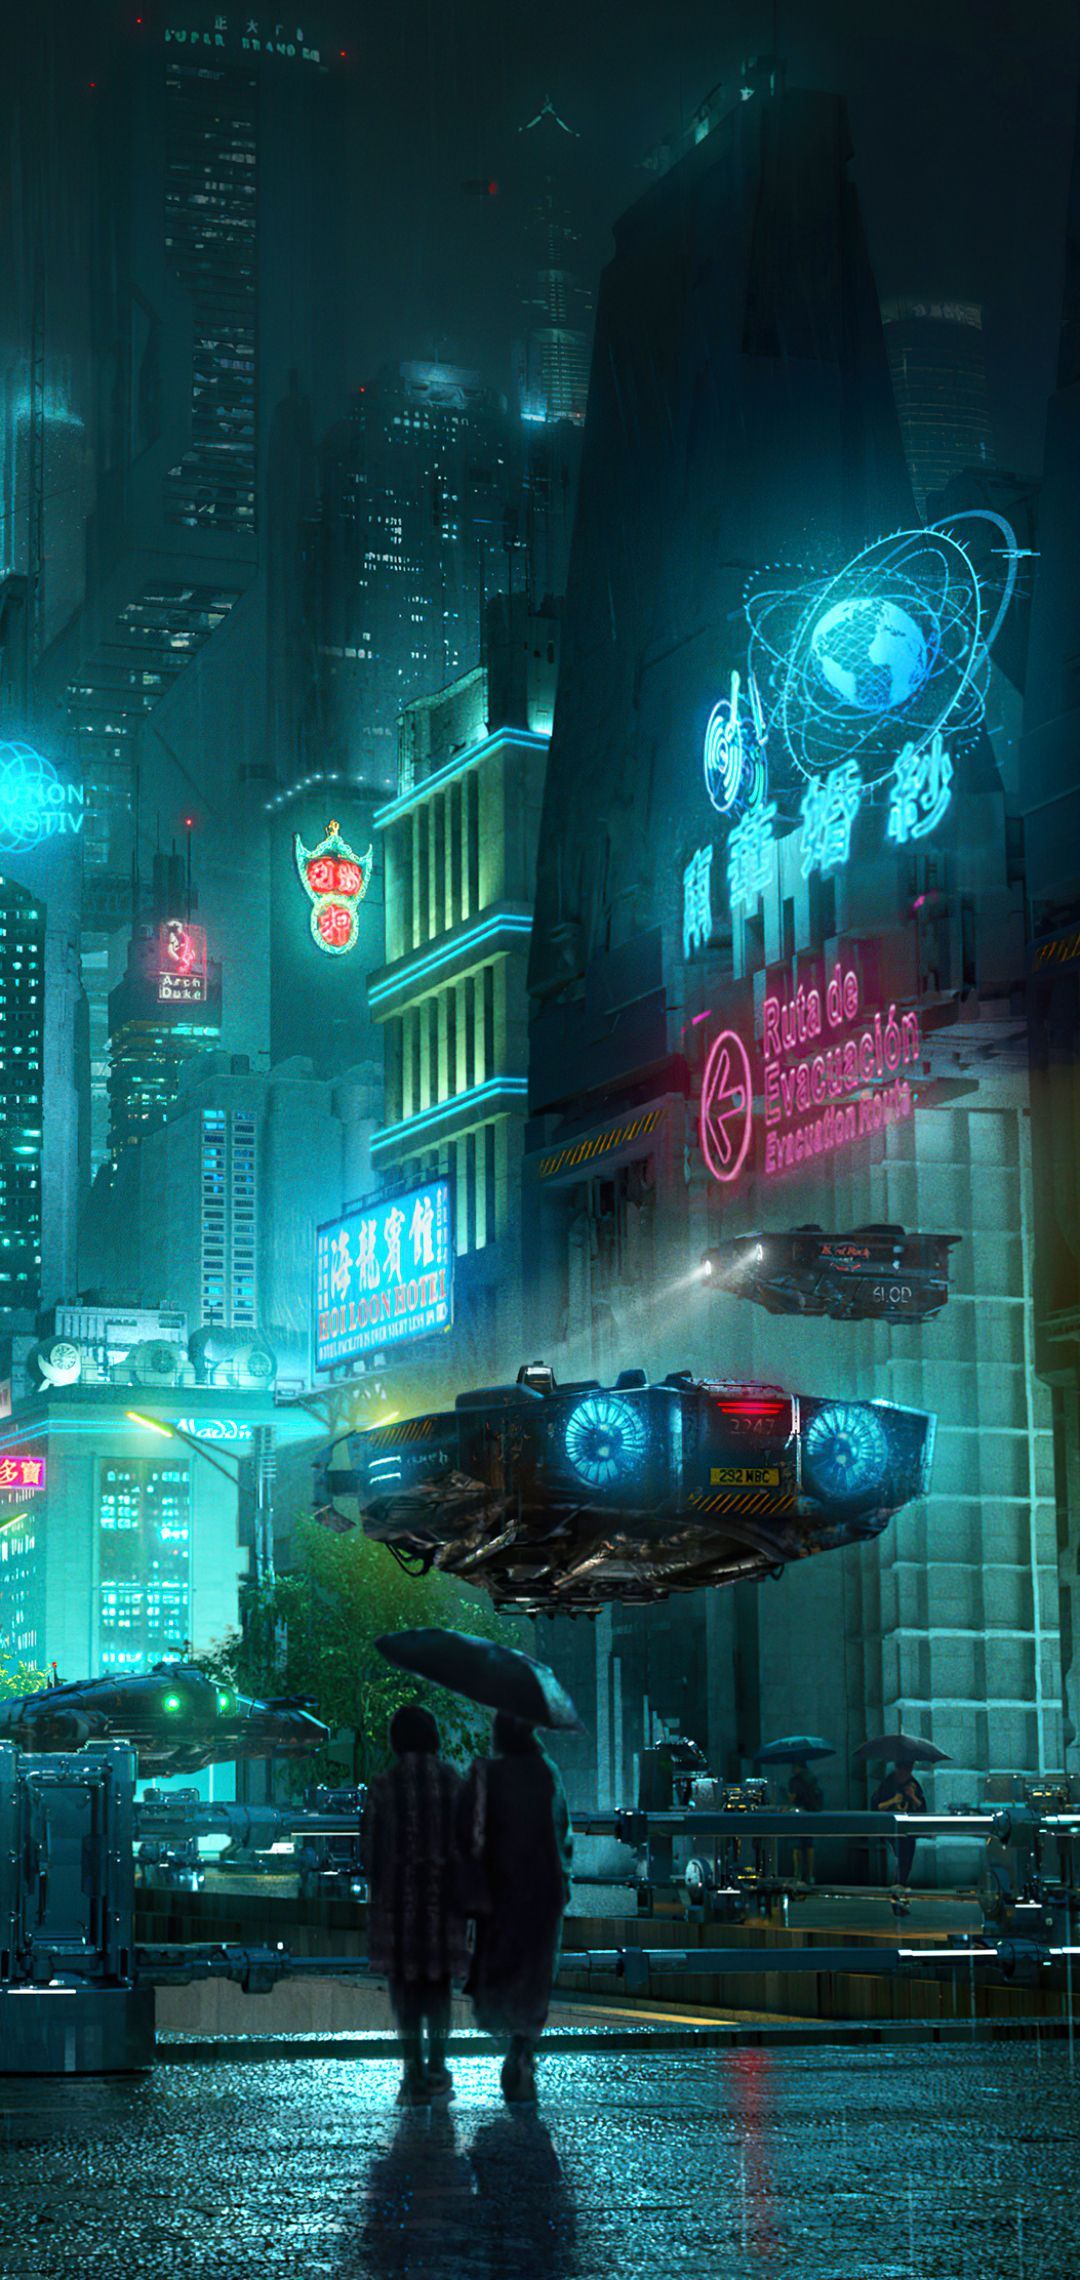 Mobile wallpaper: Night, City, Building, Cyberpunk, Sci Fi, Futuristic, 1422408 download the picture for free